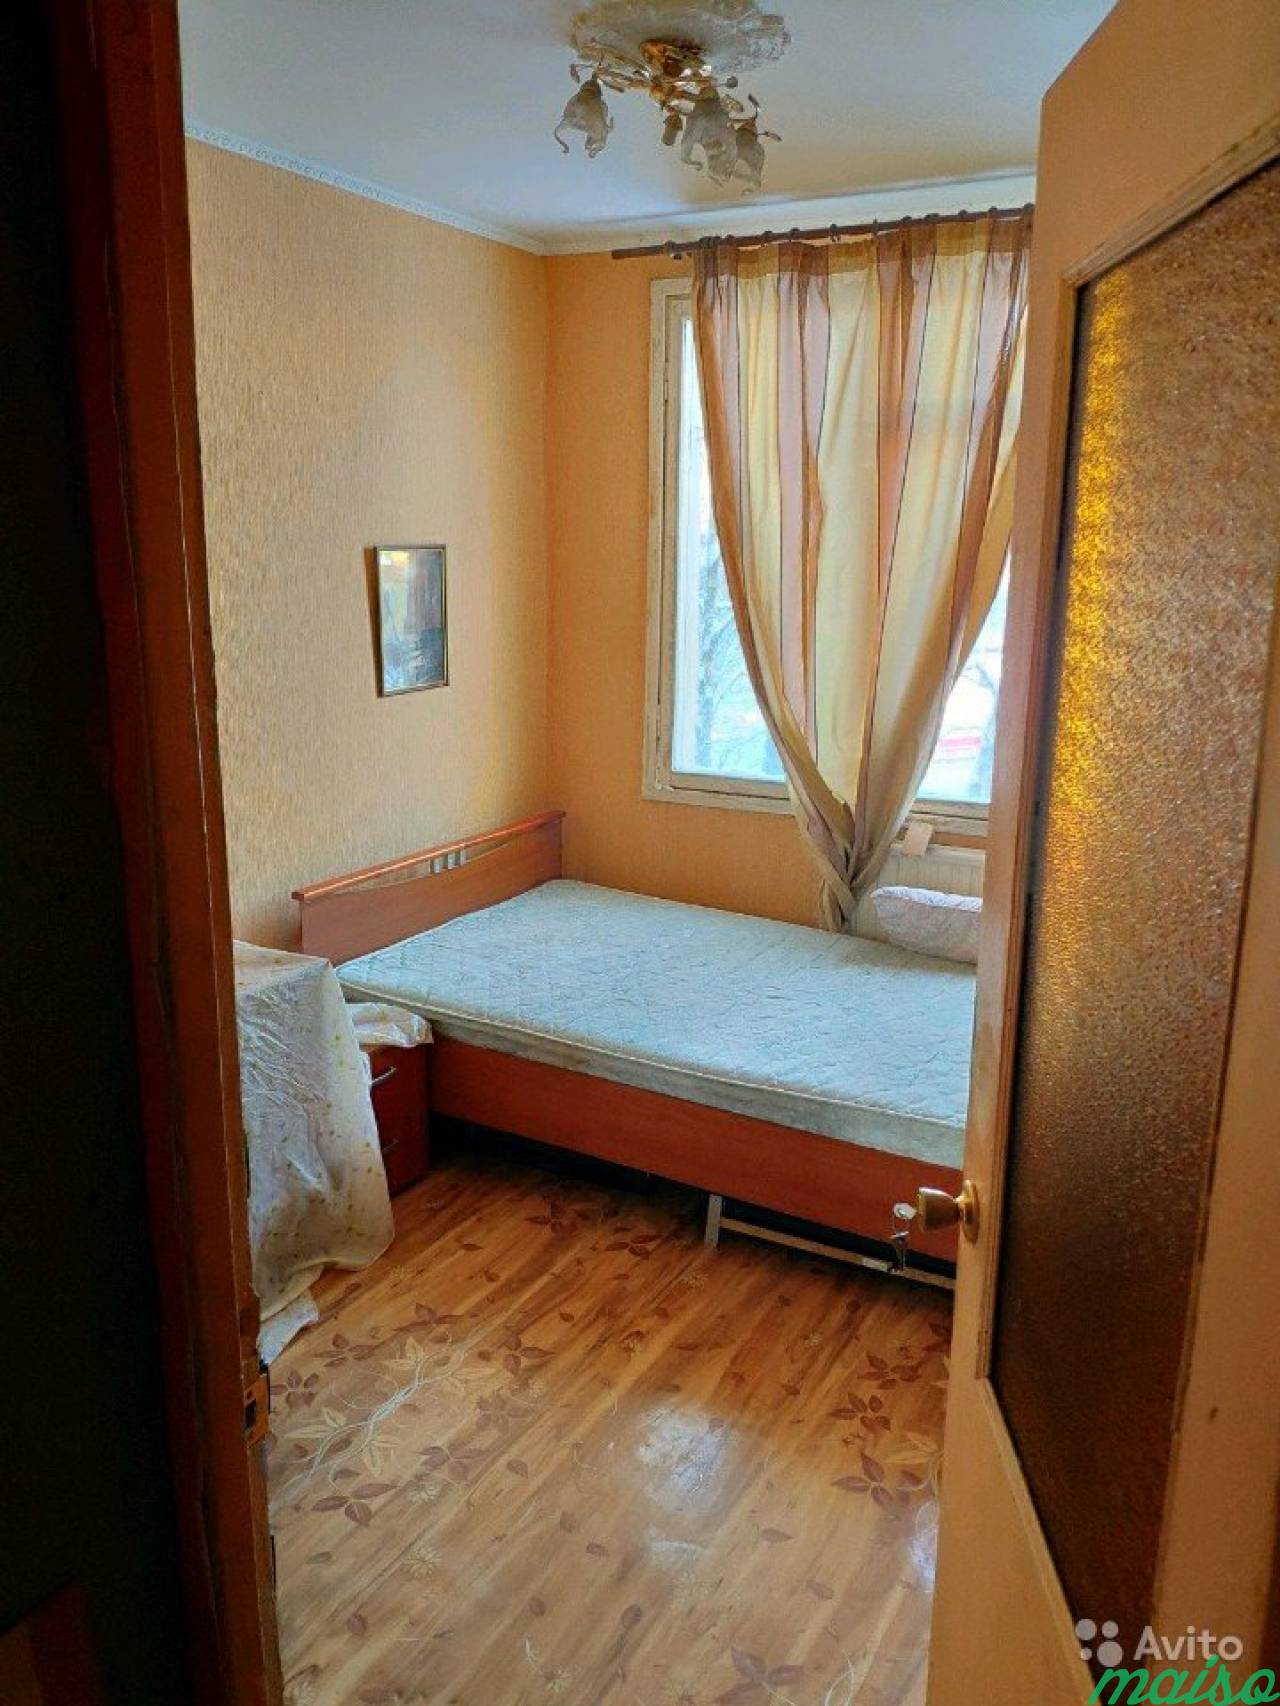 Комната 11 м² в 4-к, 3/5 эт. в Санкт-Петербурге. Фото 1